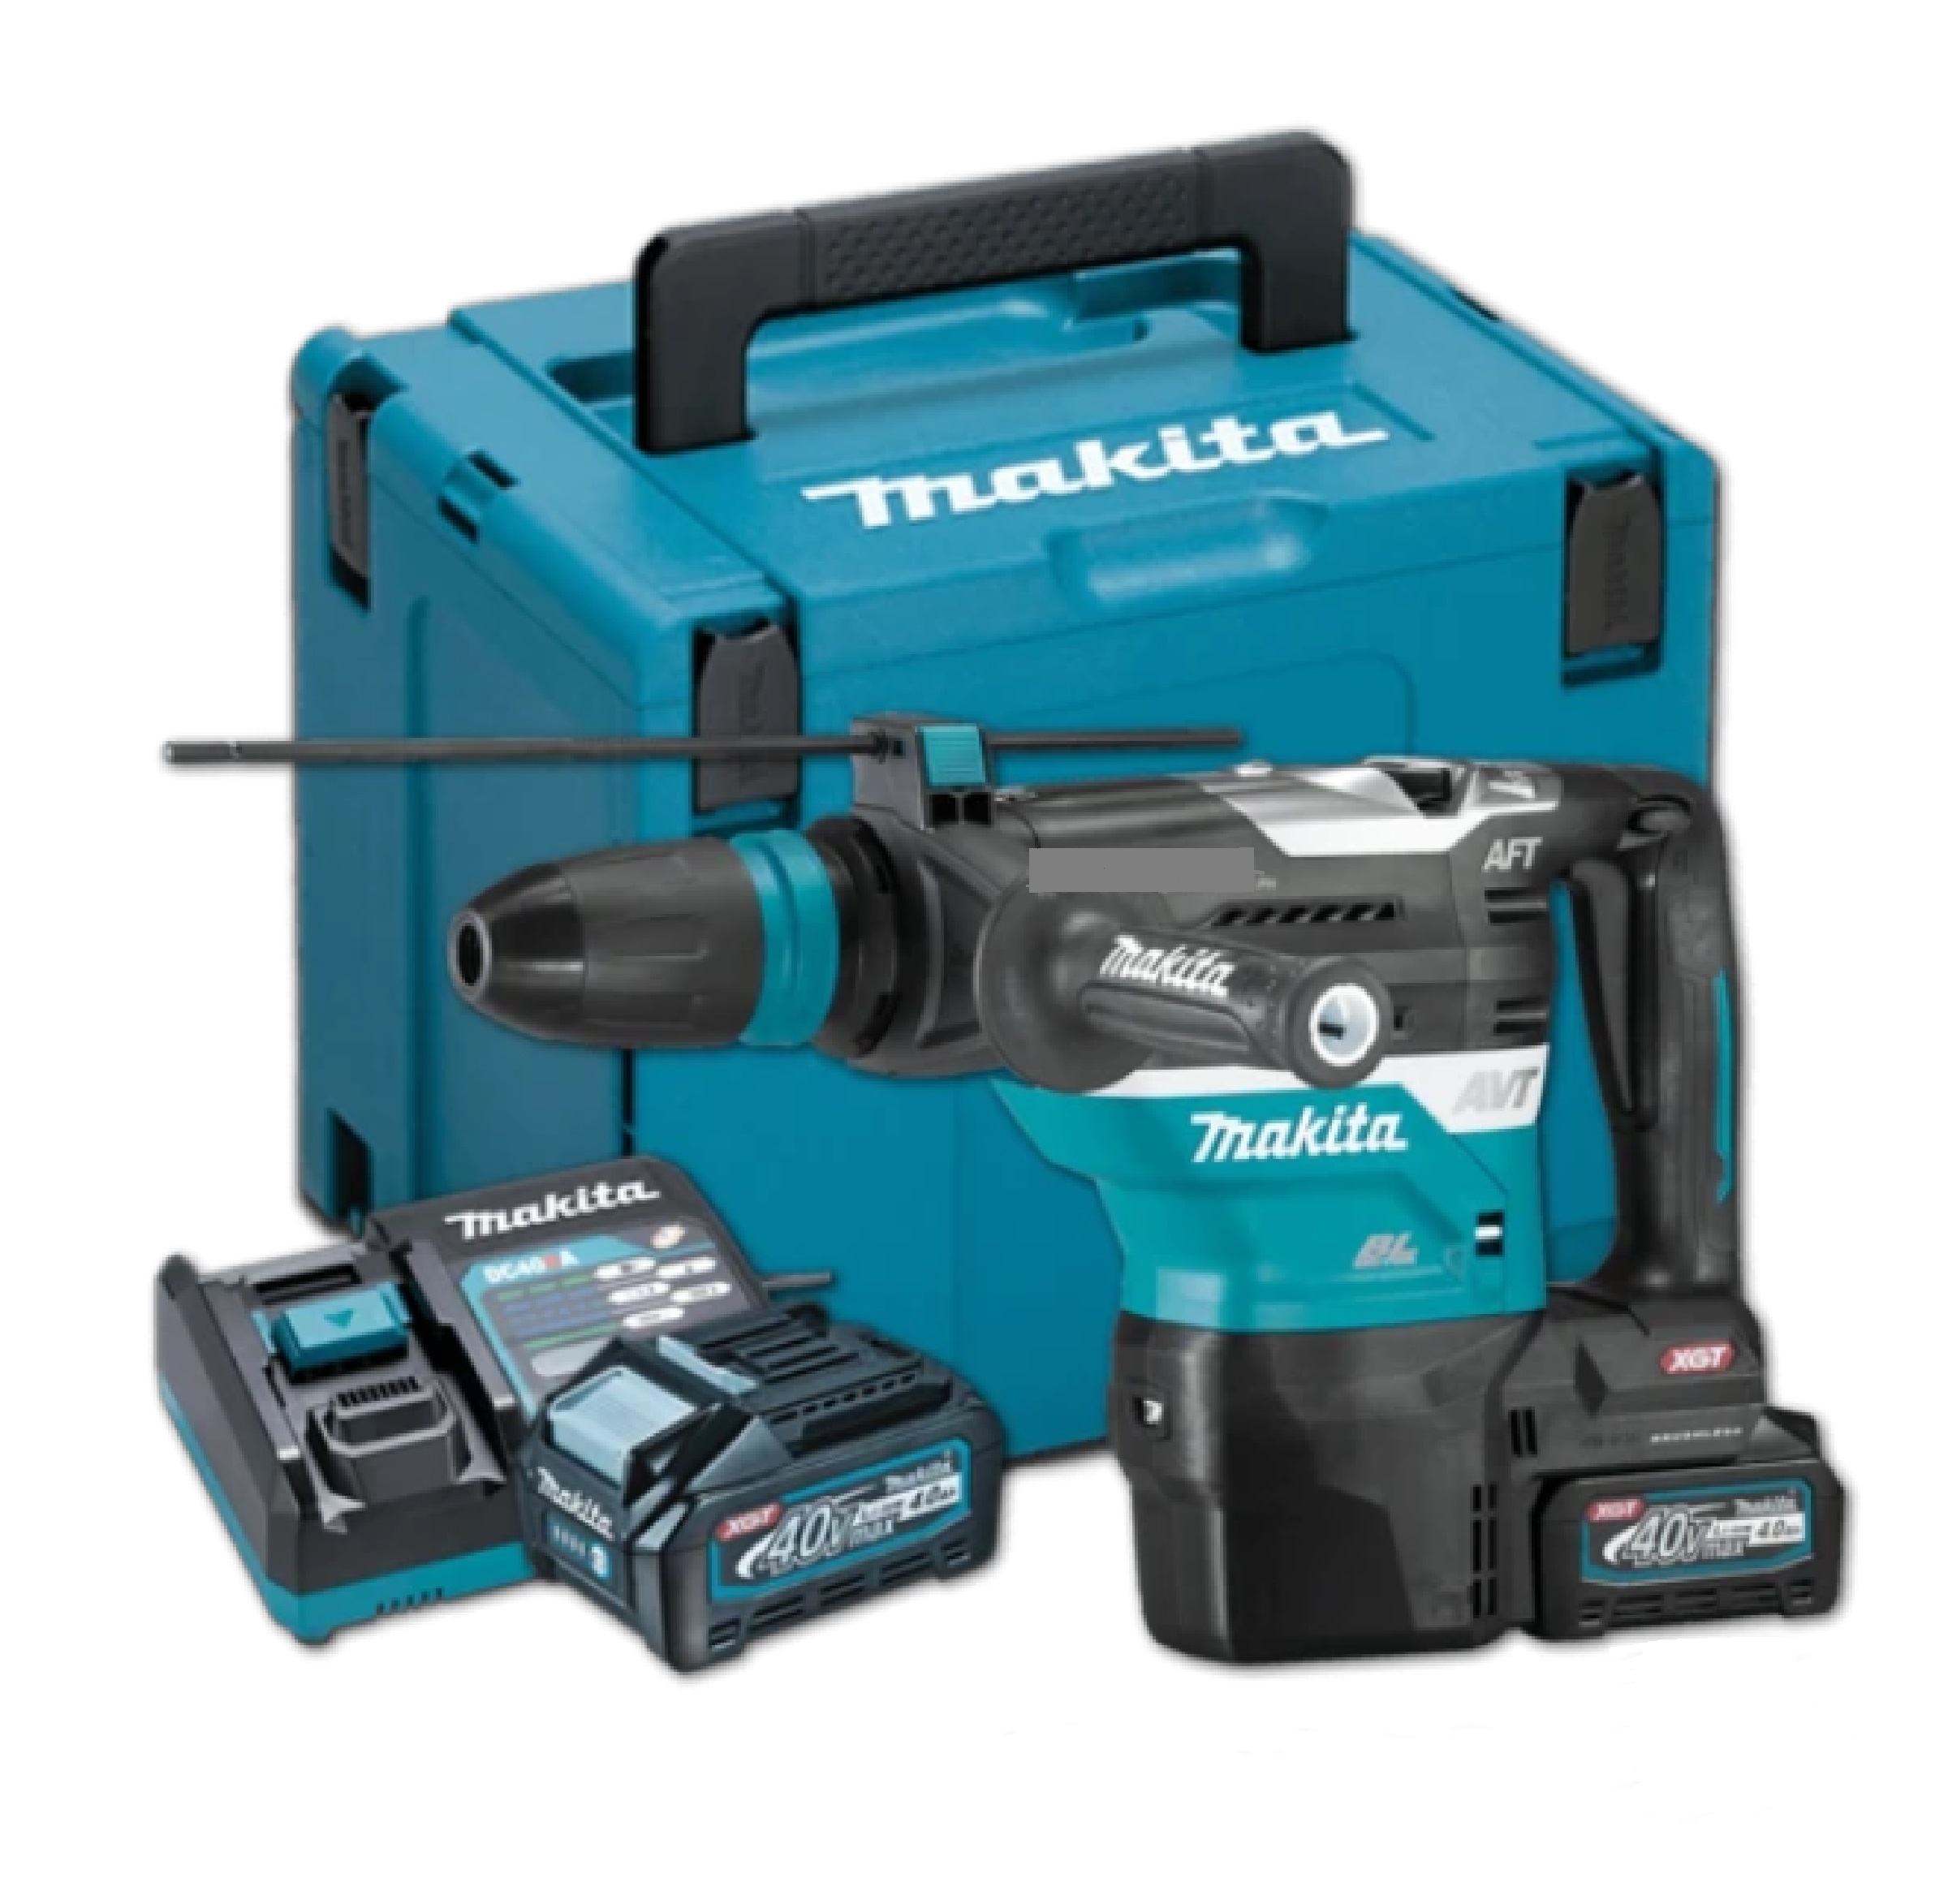 Makita HR005GM201 2 X 40V 4.0AH LI-ION 40MM Brushless SDS-MAX Rotary Hammer